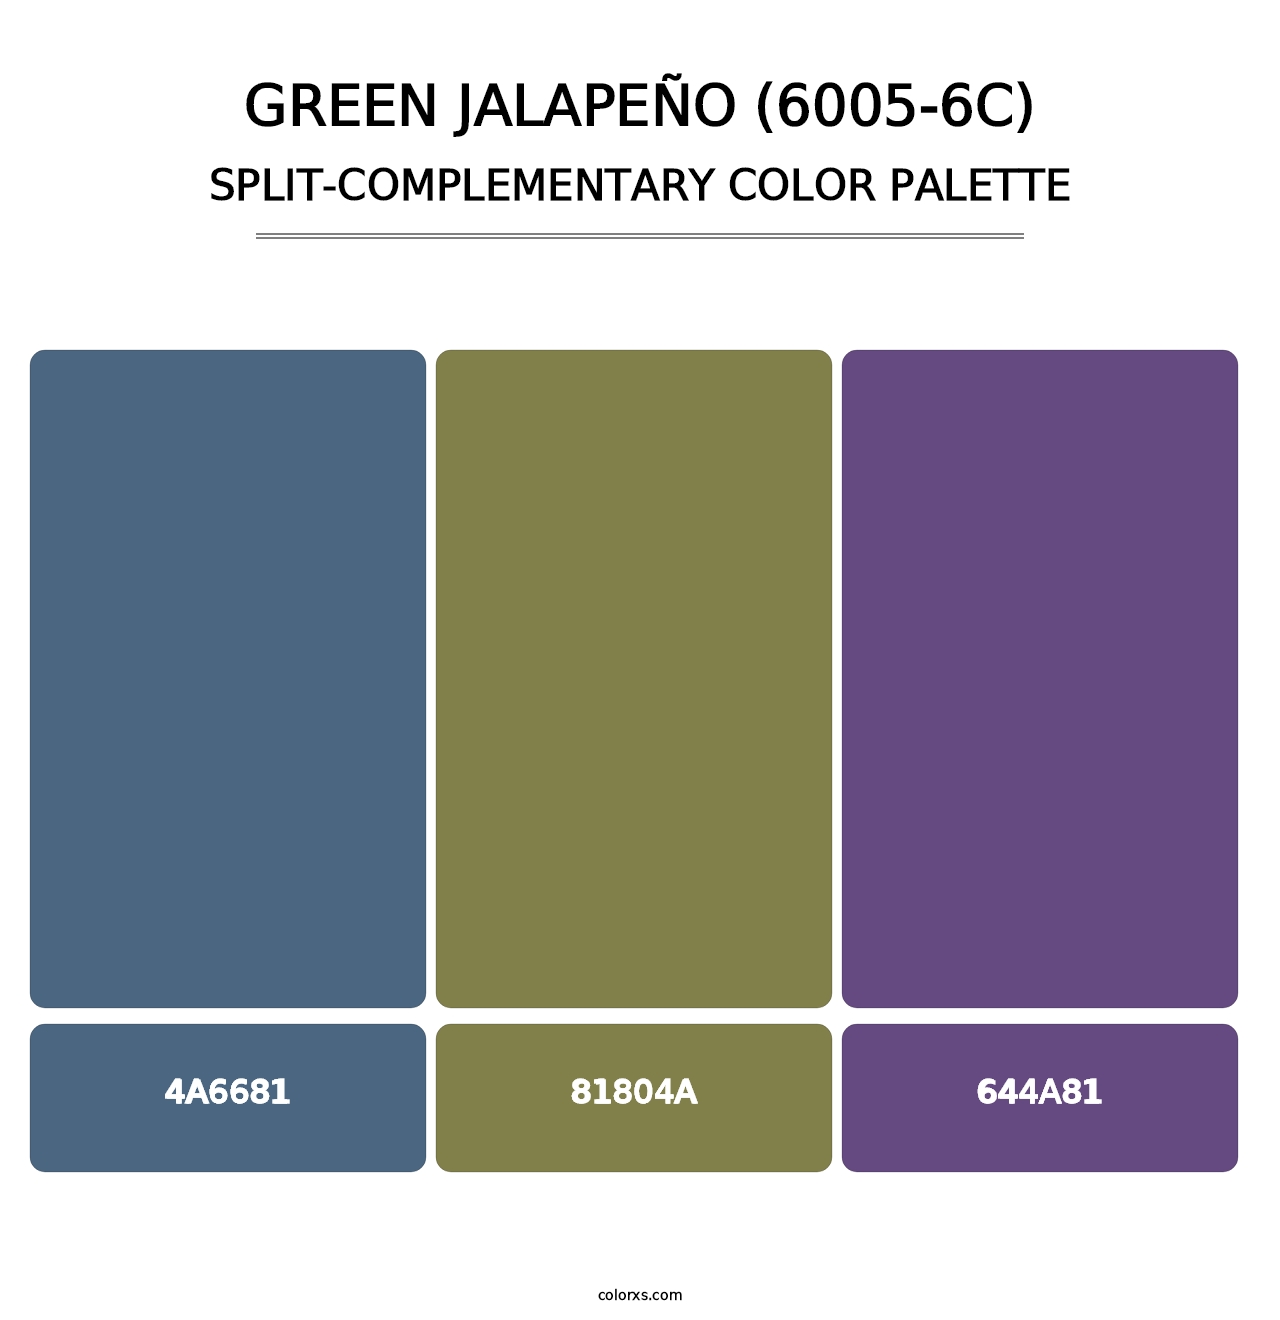 Green Jalapeño (6005-6C) - Split-Complementary Color Palette